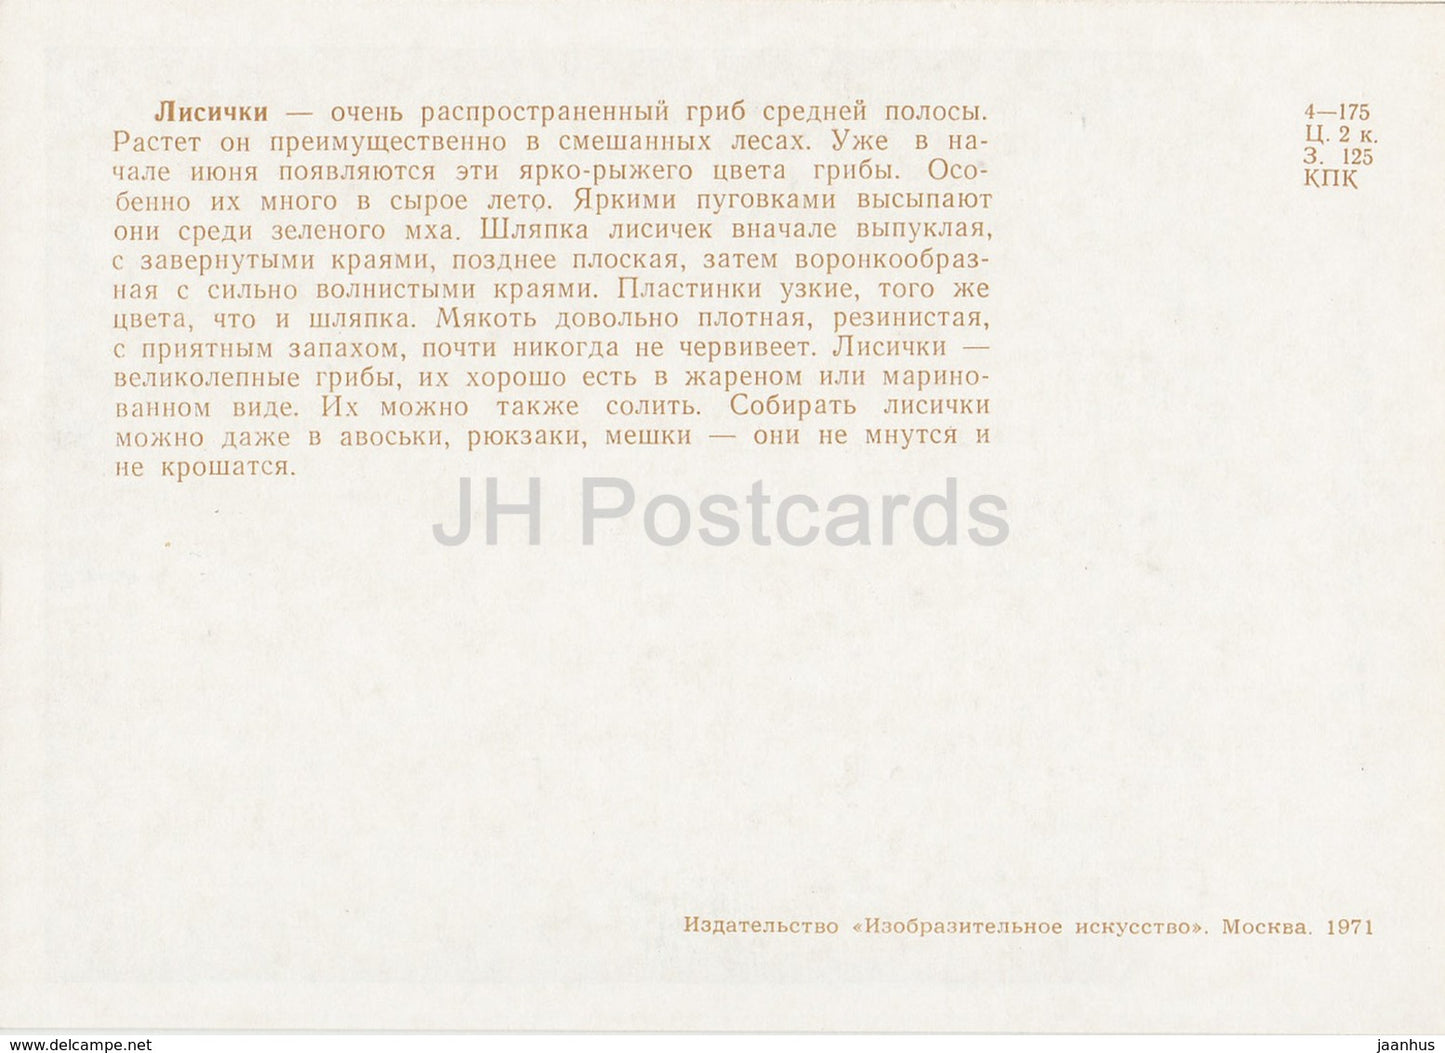 Chanterelle - Cantharellus cibarius - champignons - illustration - 1971 - Russie URSS - inutilisé